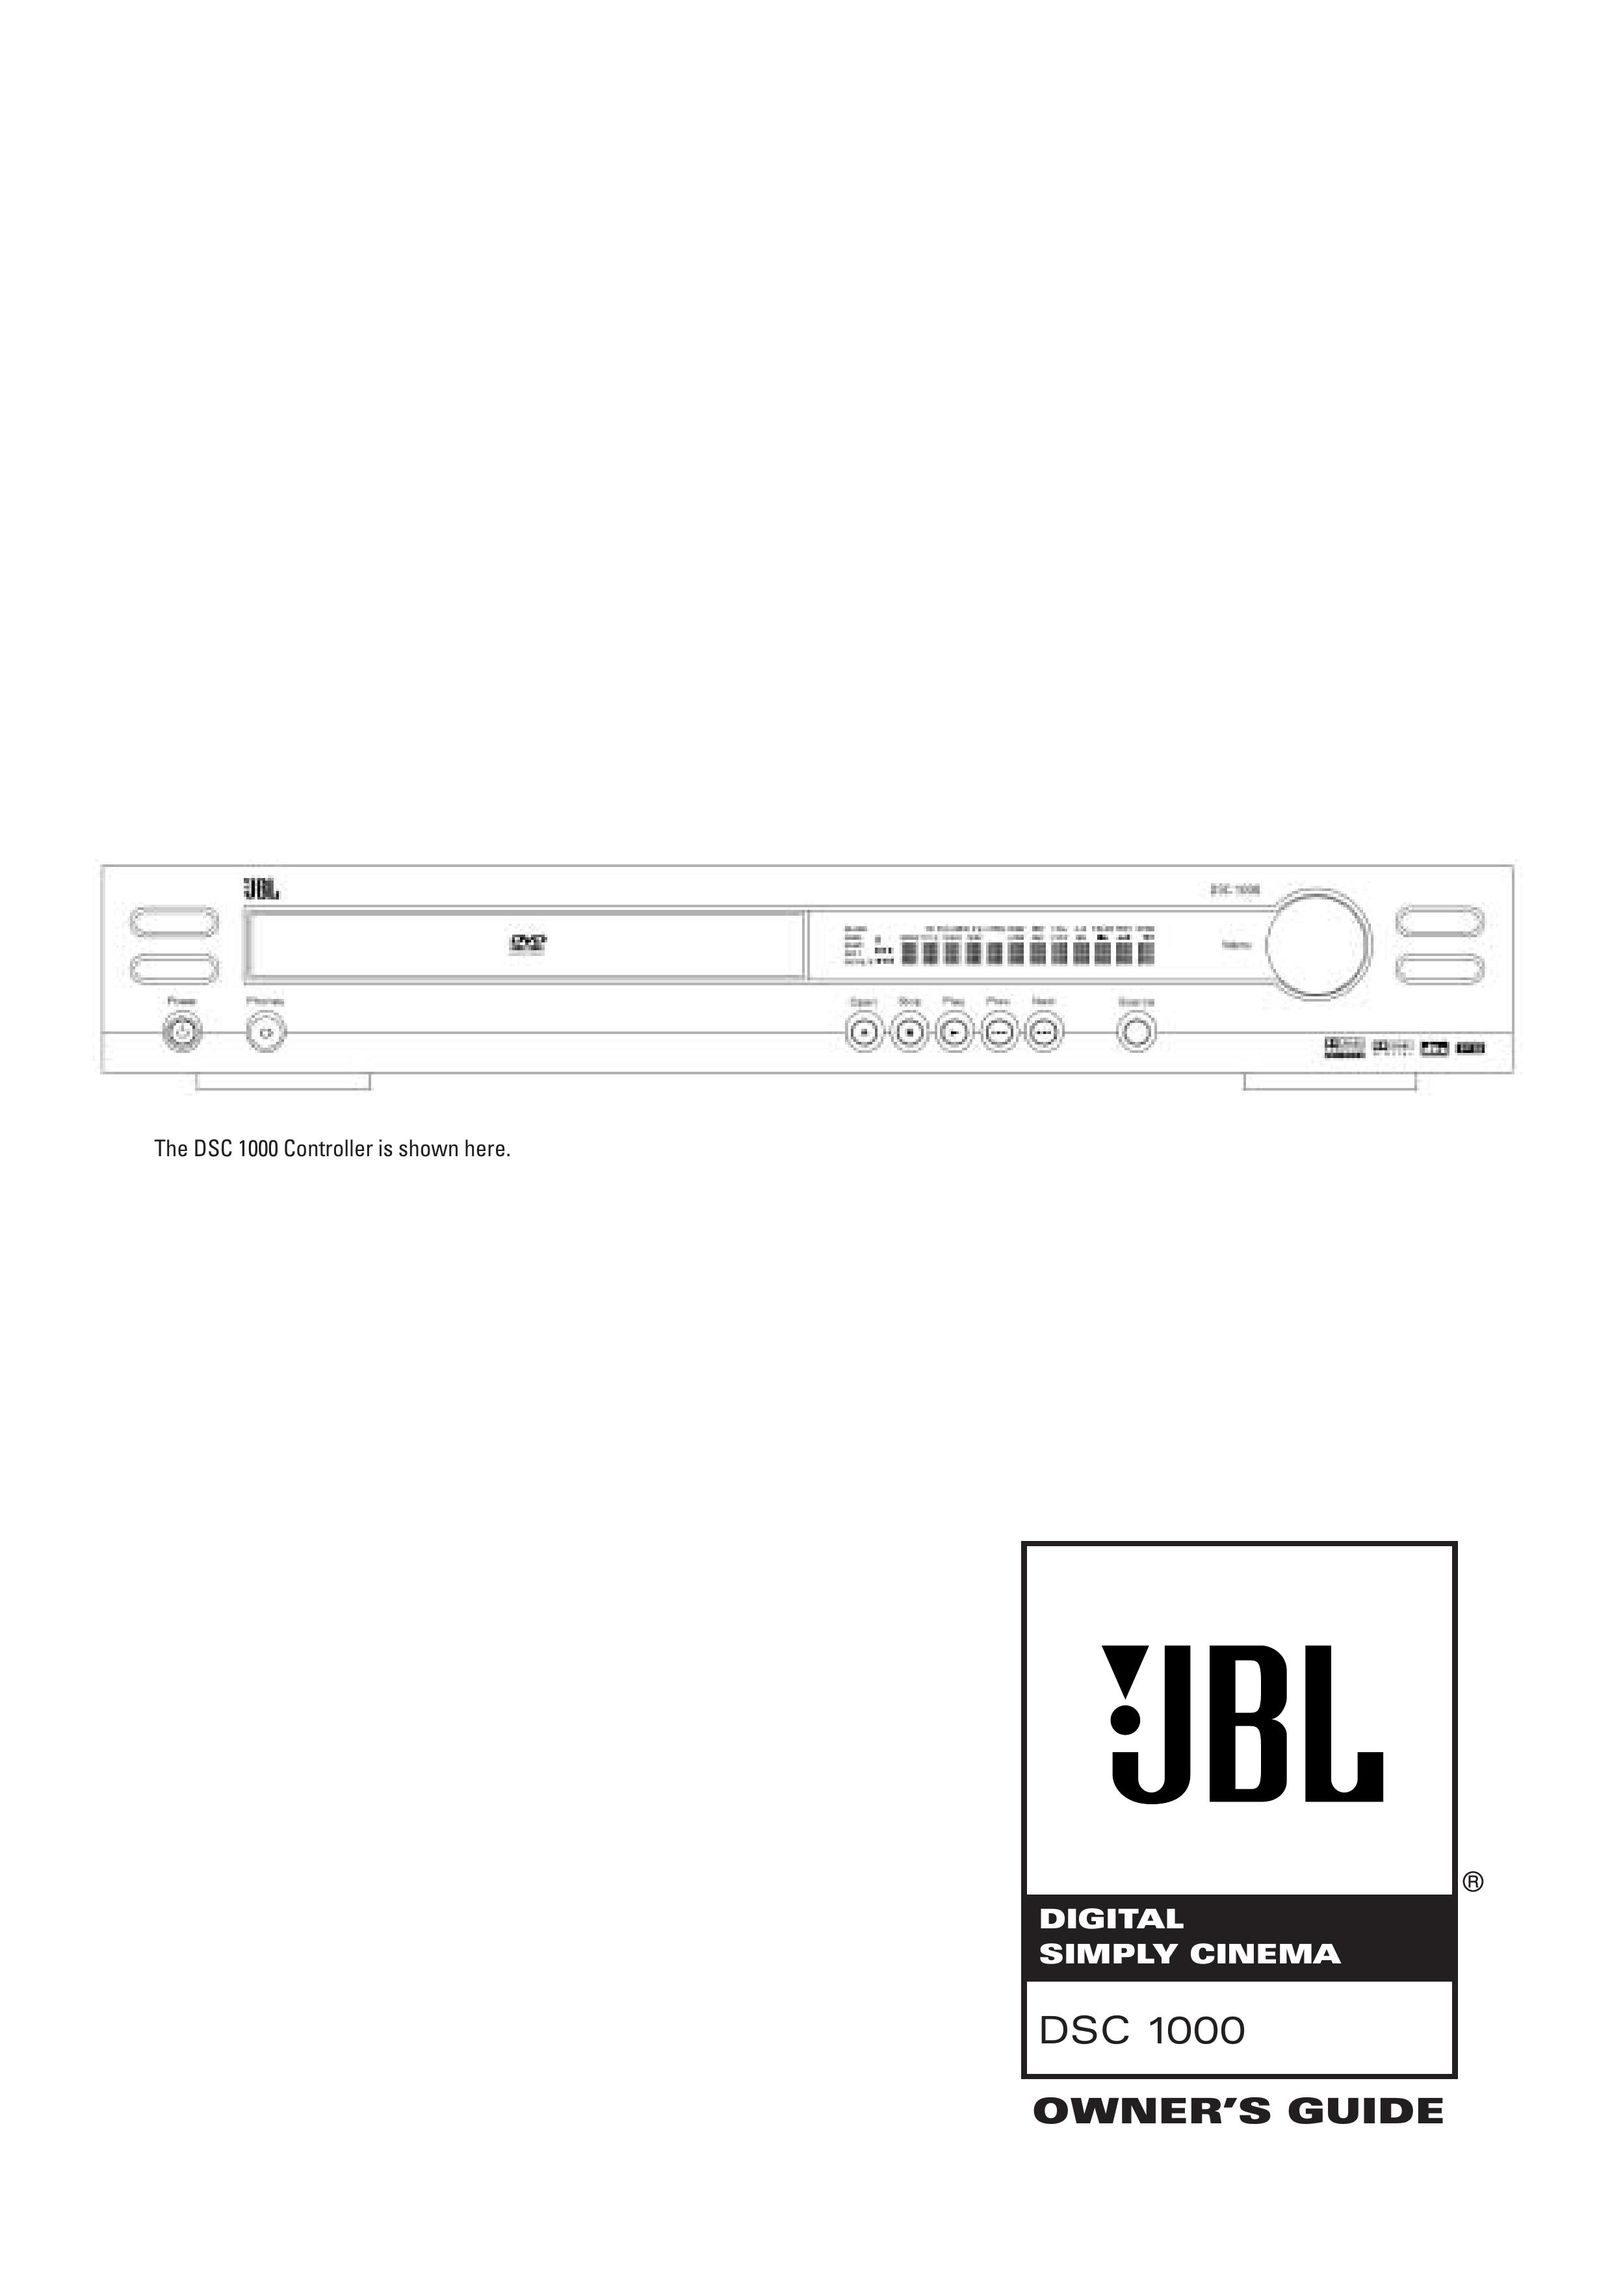 JBL DSC 1000 Home Theater System User Manual